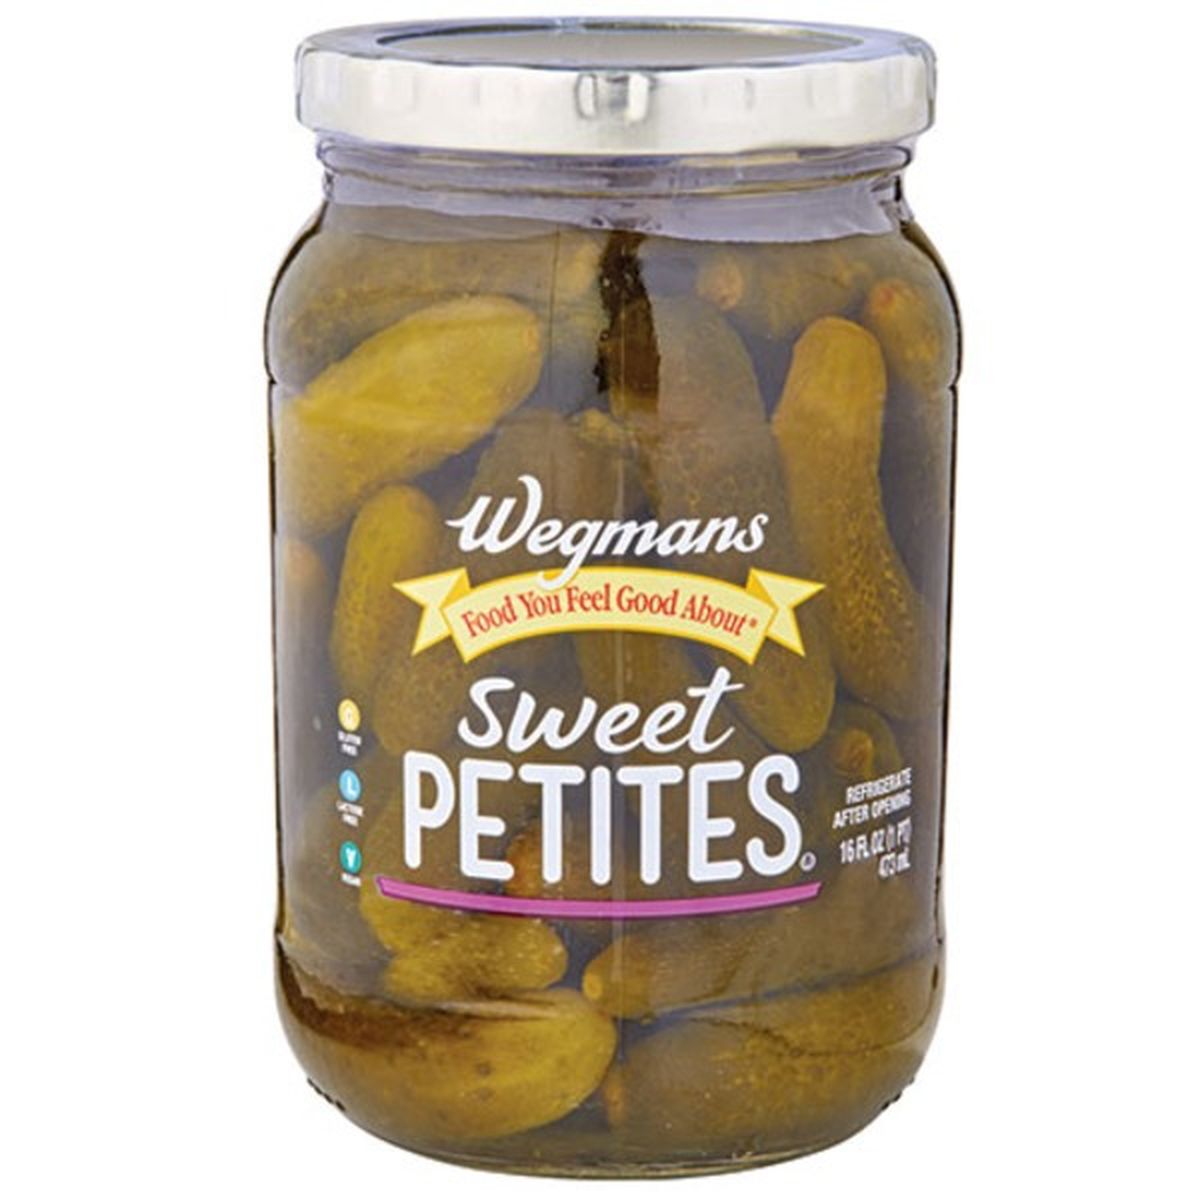 Calories in Wegmans Sweet Petites Pickles